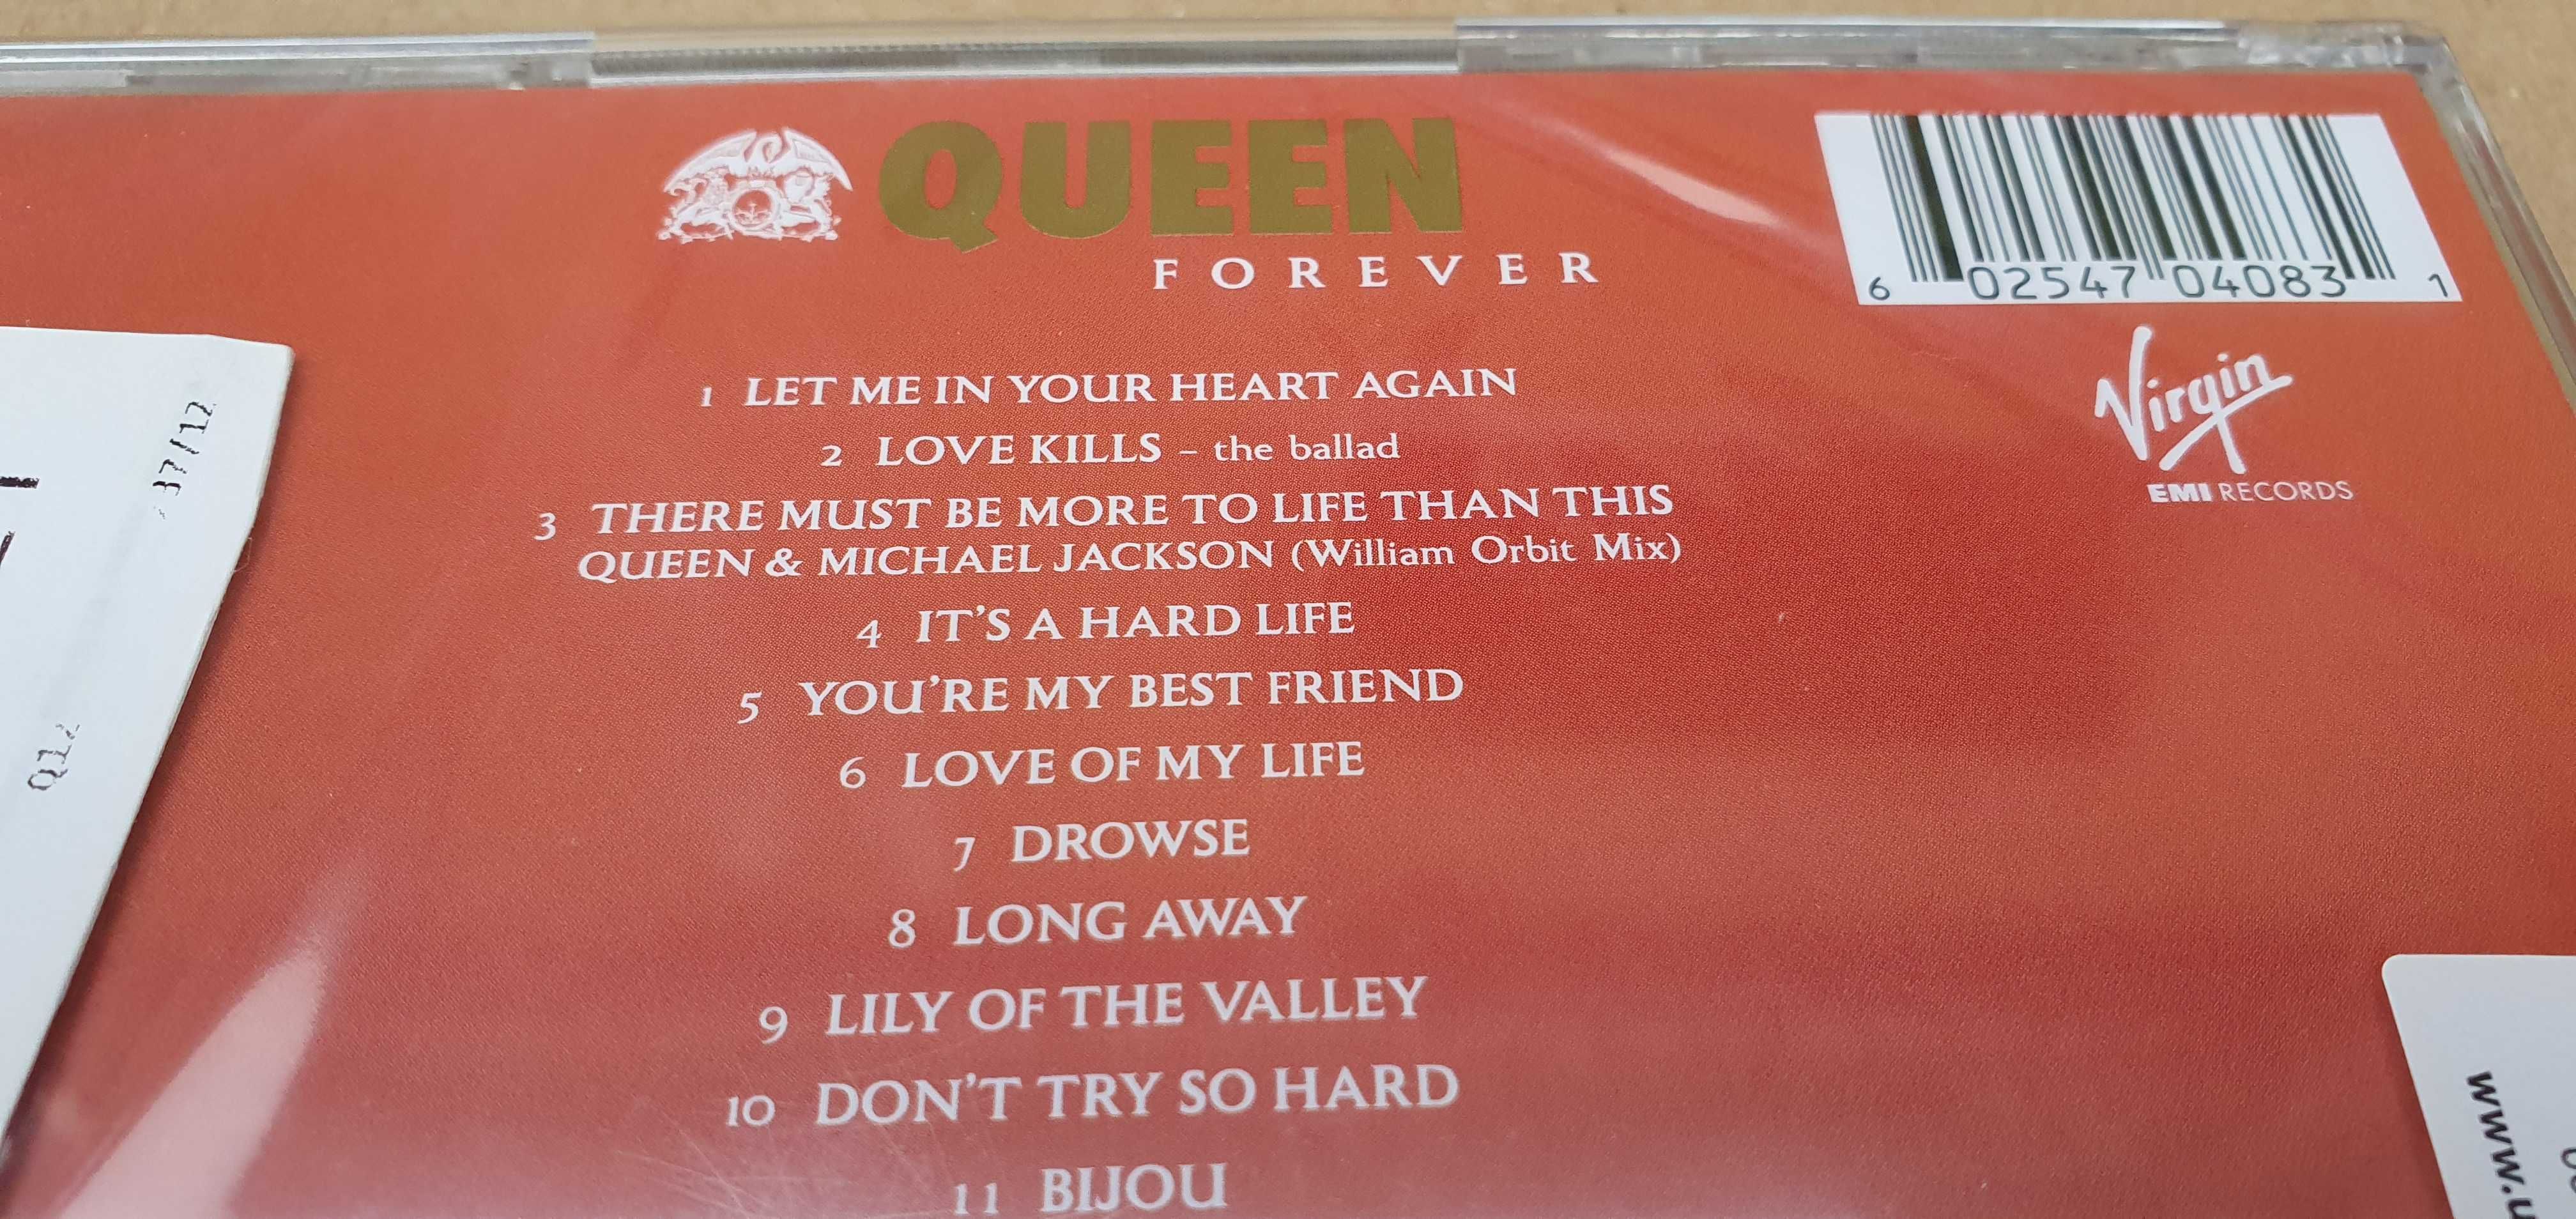 Płyta kompaktowa CD Queen - Forever